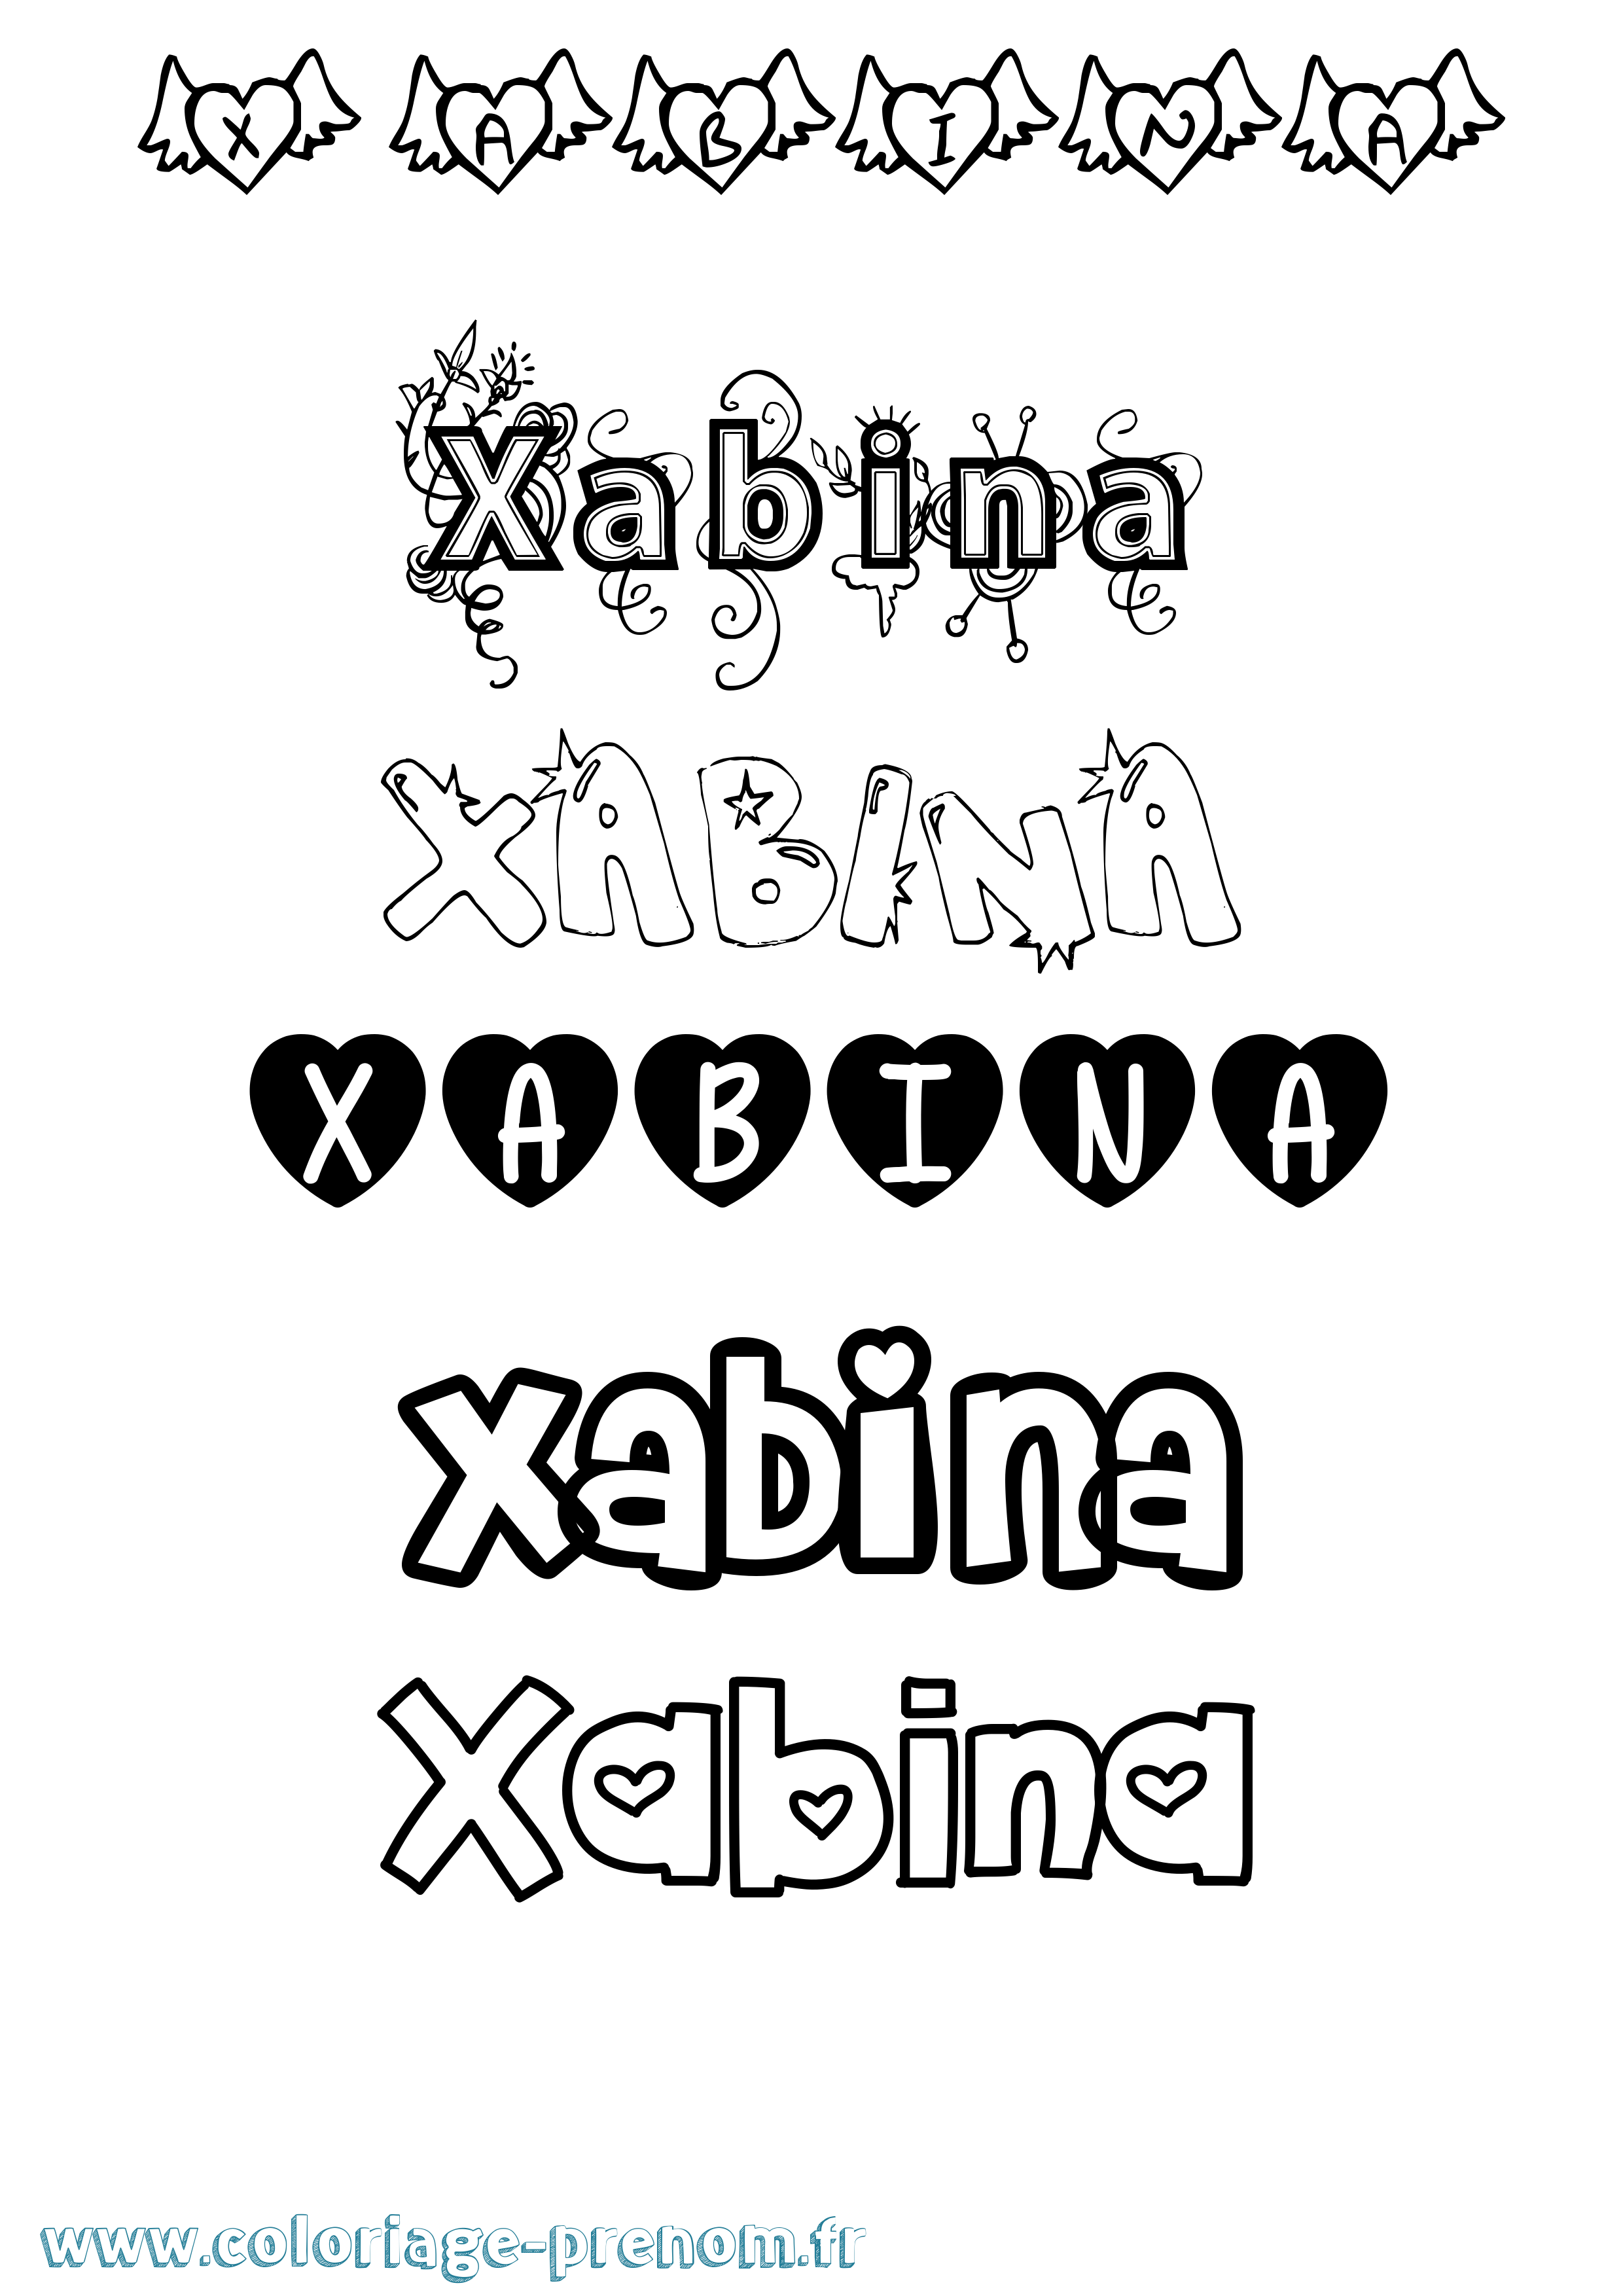 Coloriage prénom Xabina Girly